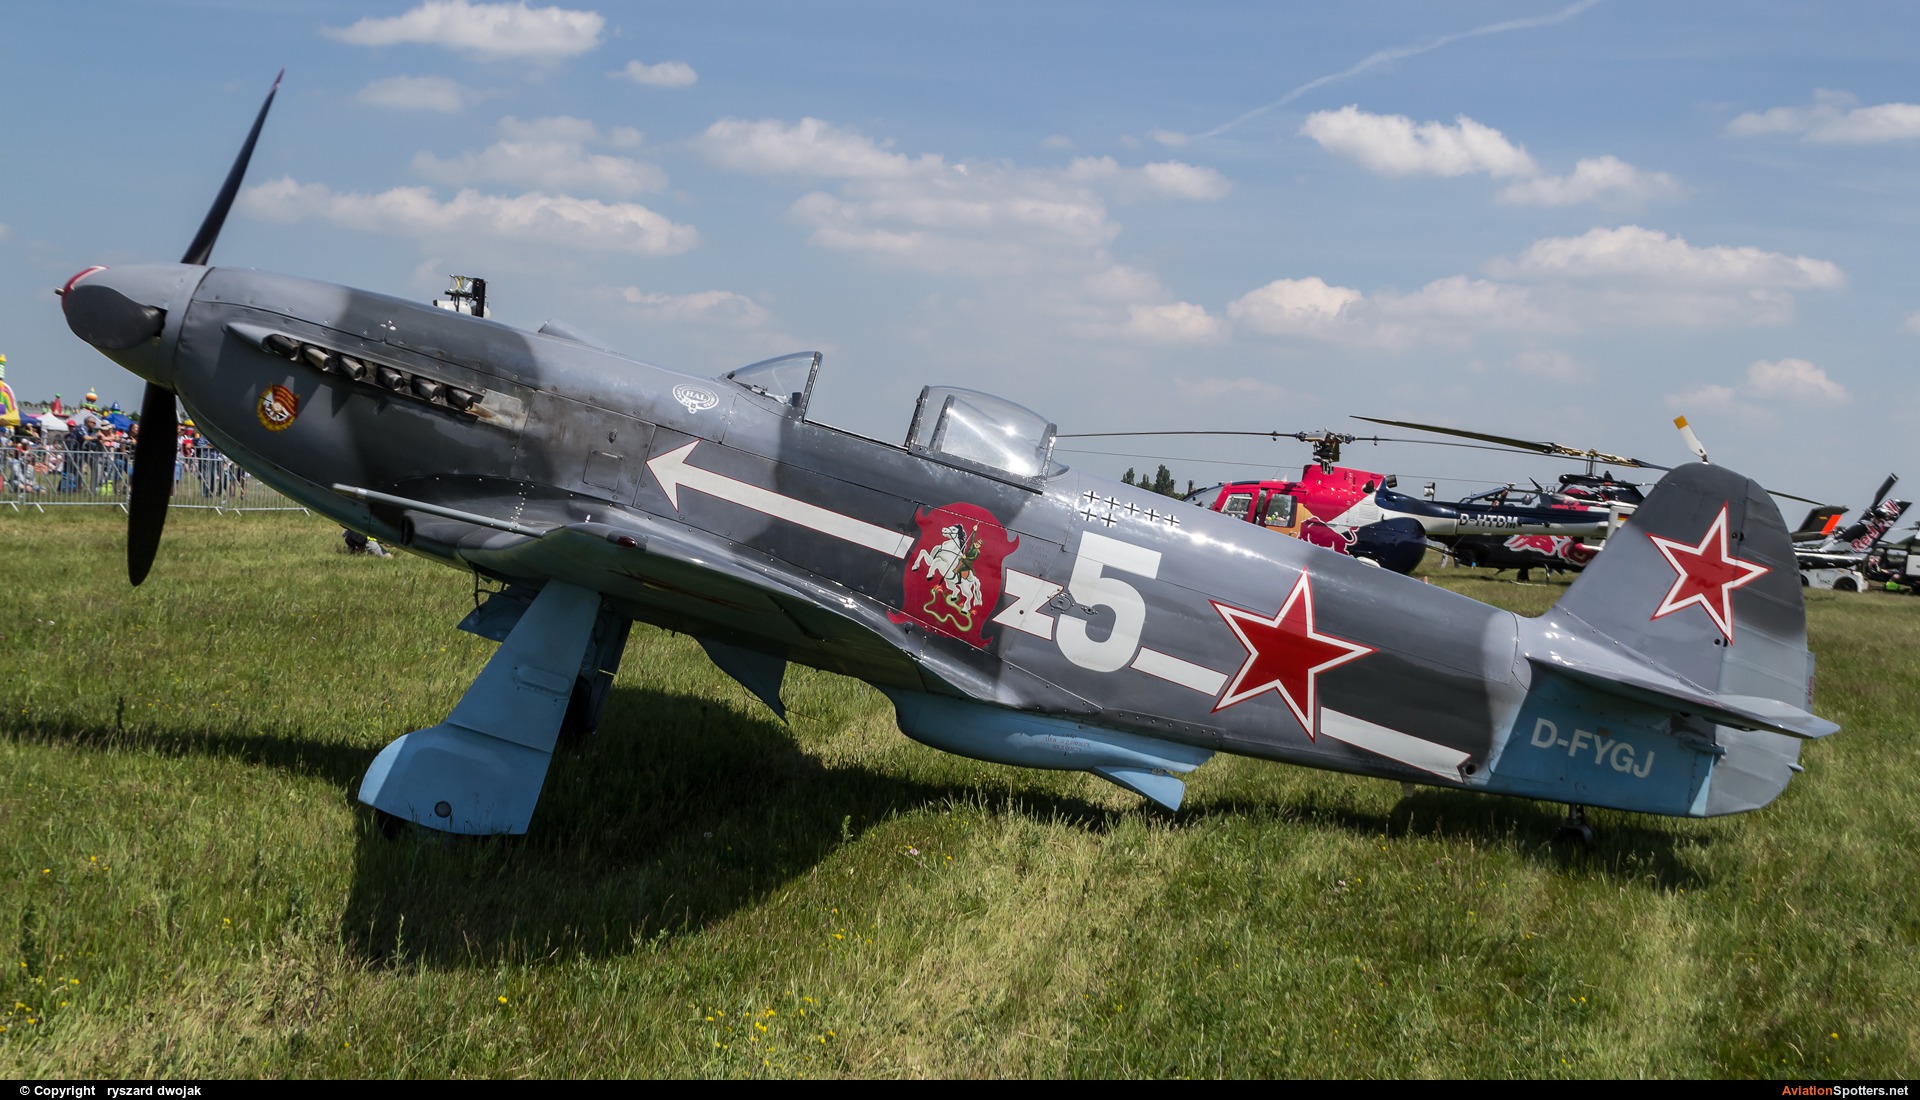 Private  -  Yak-3M  (D-FYGJ) By Ryszard Dwojak (ryś)